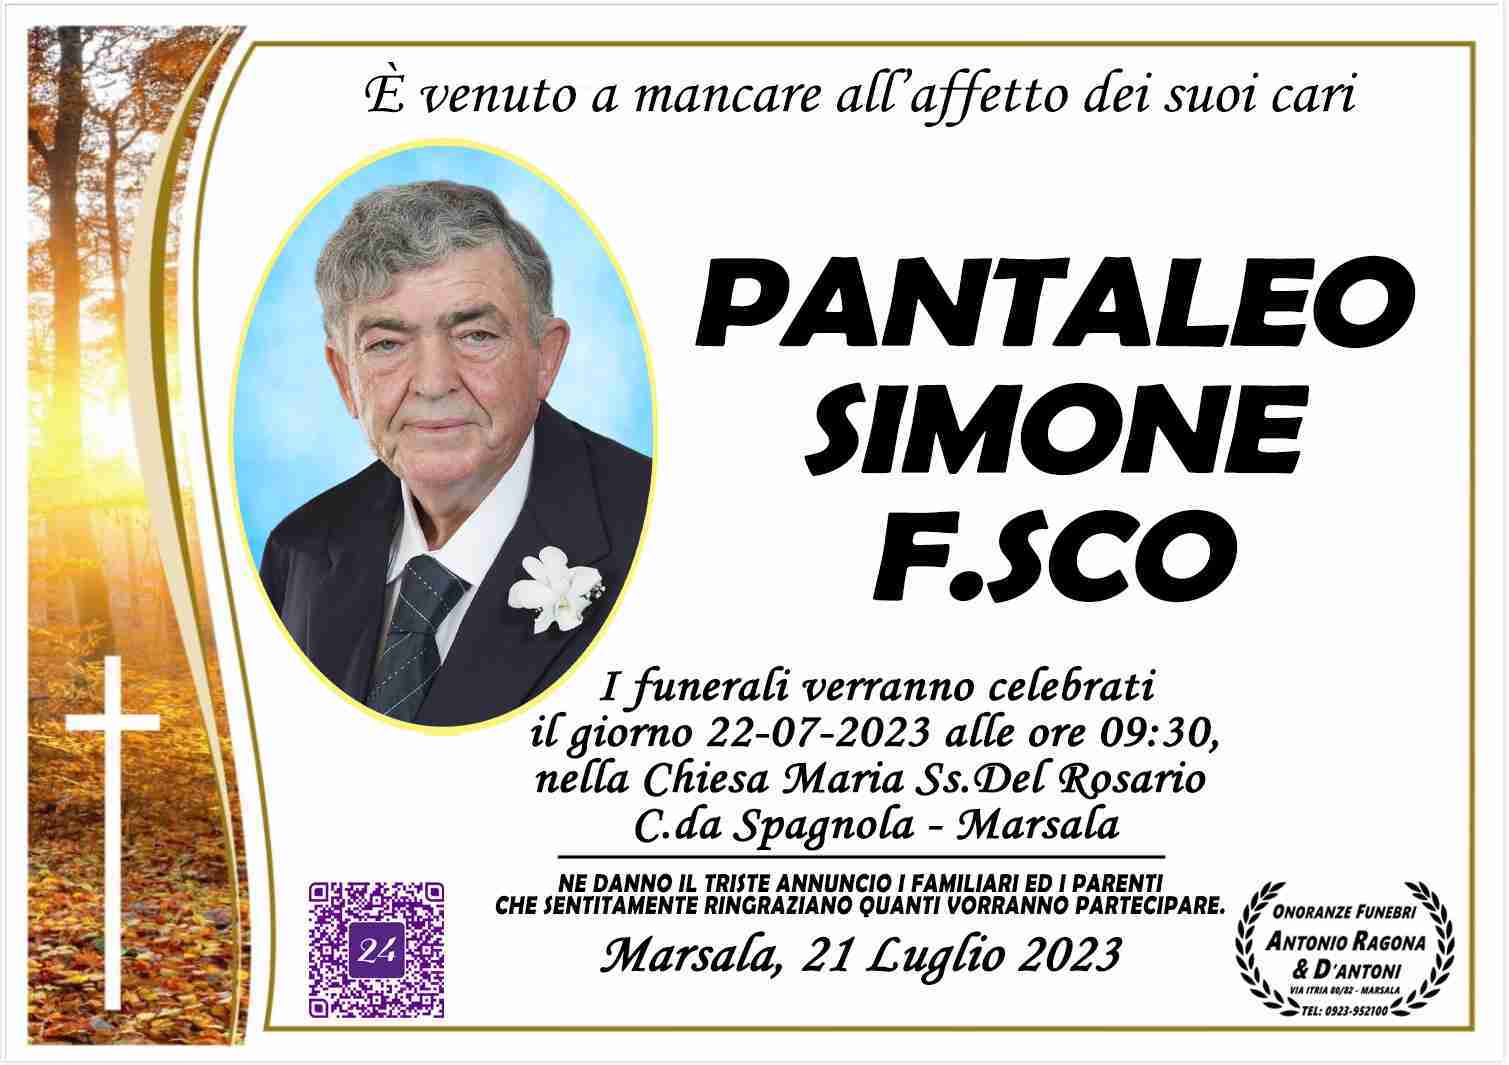 Simone F.sco Pantaleo